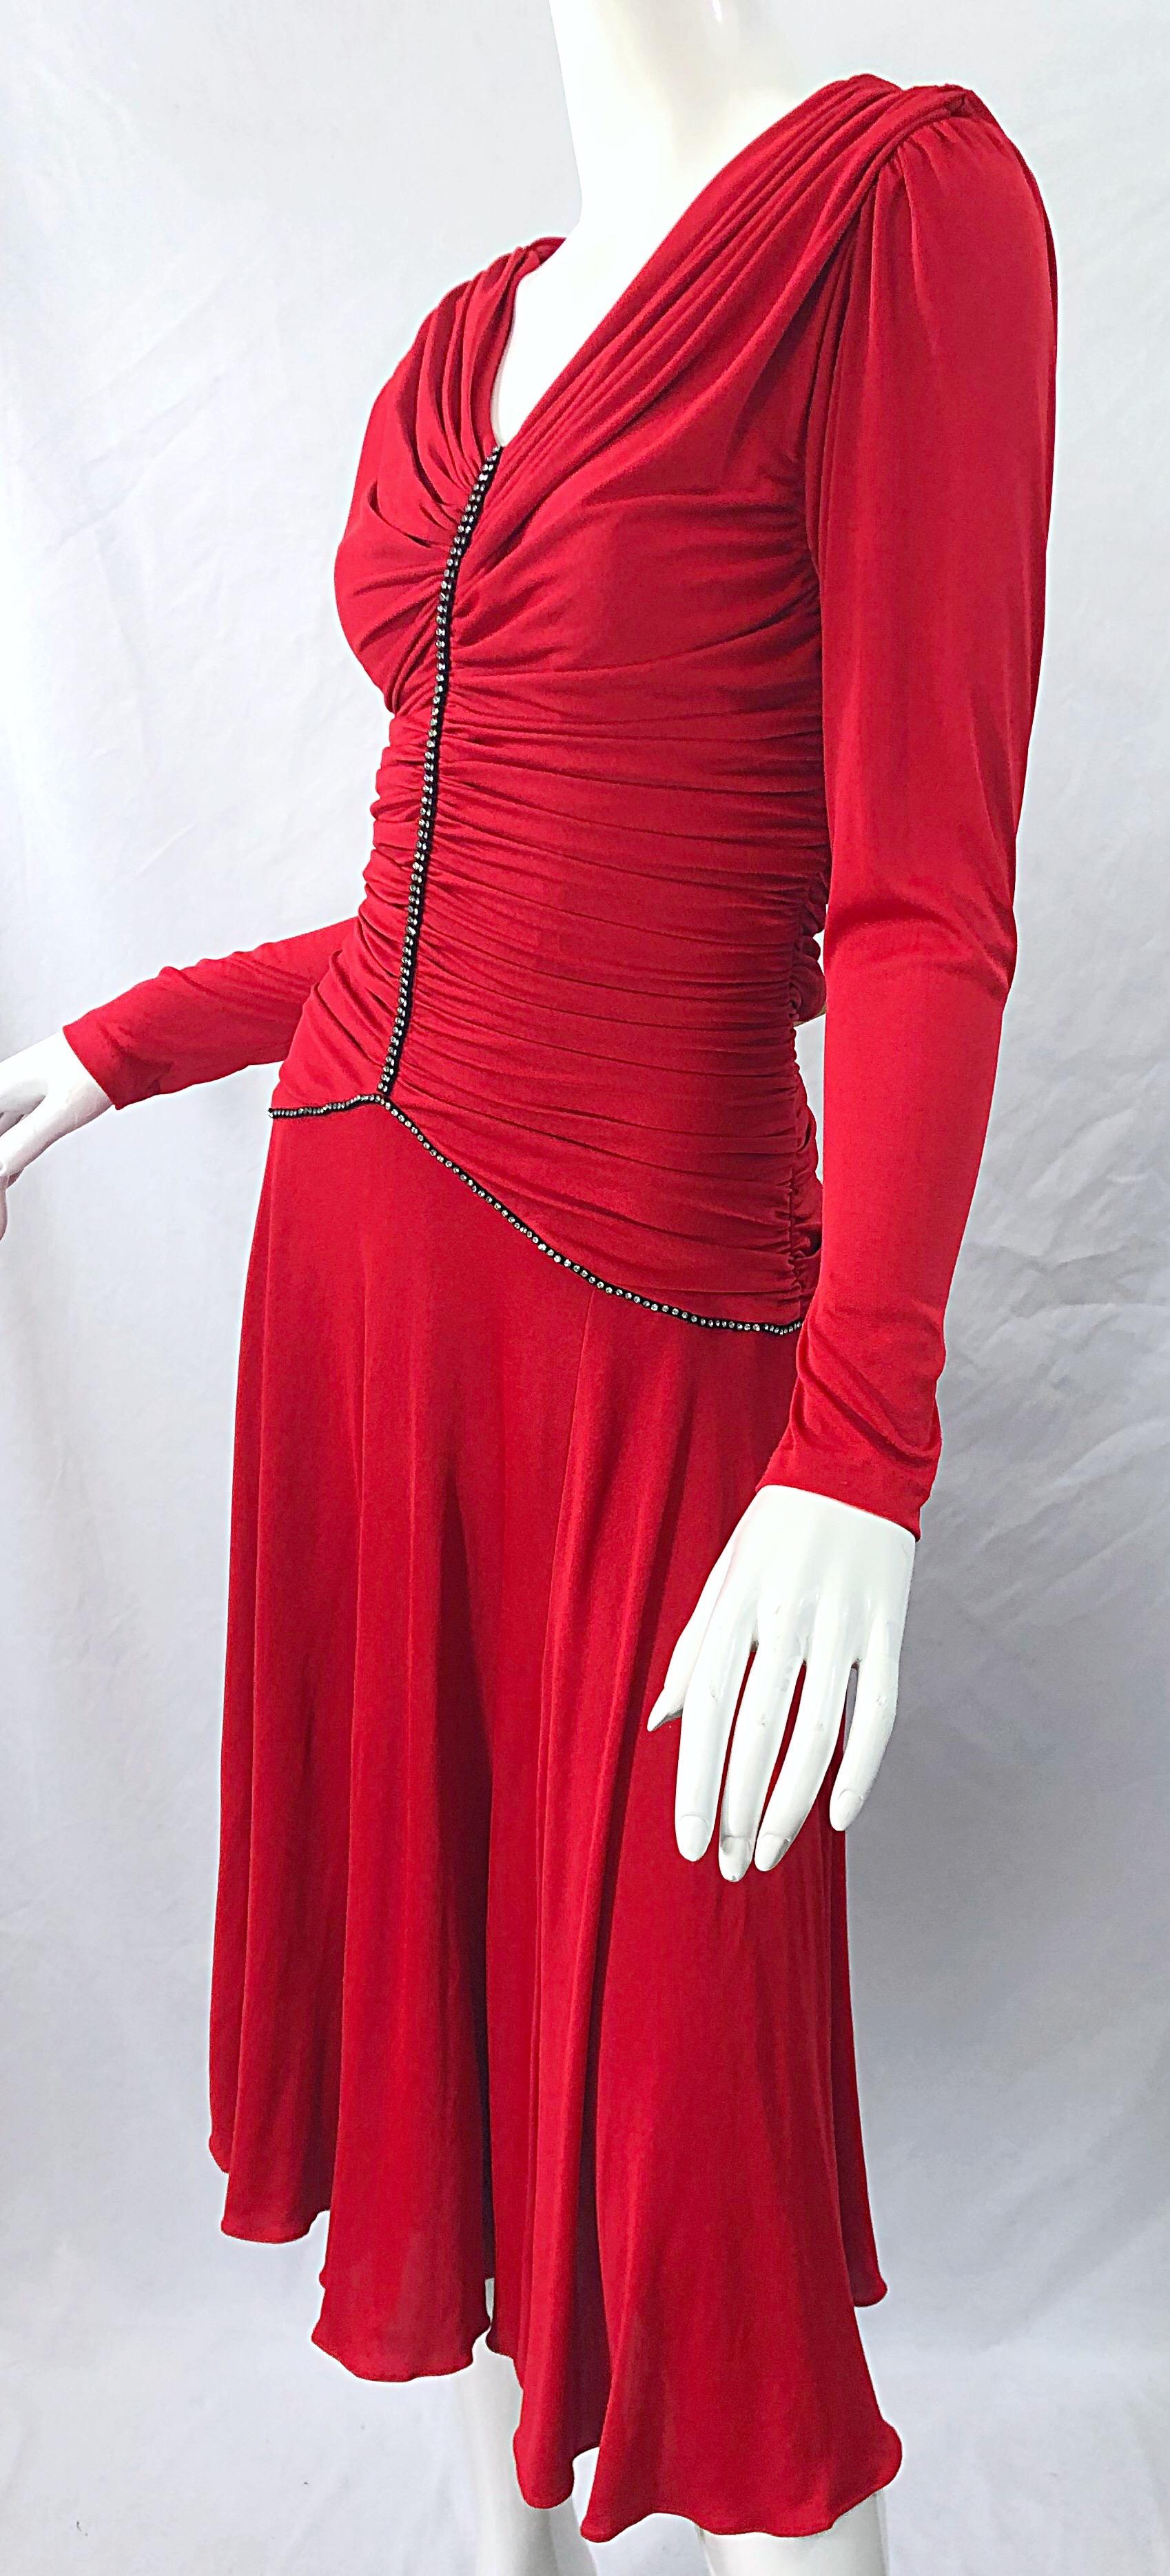 1970s Claraluna Original Lipstick Red Rhinestone Slinky Jersey Vintage 70s Dress For Sale 2